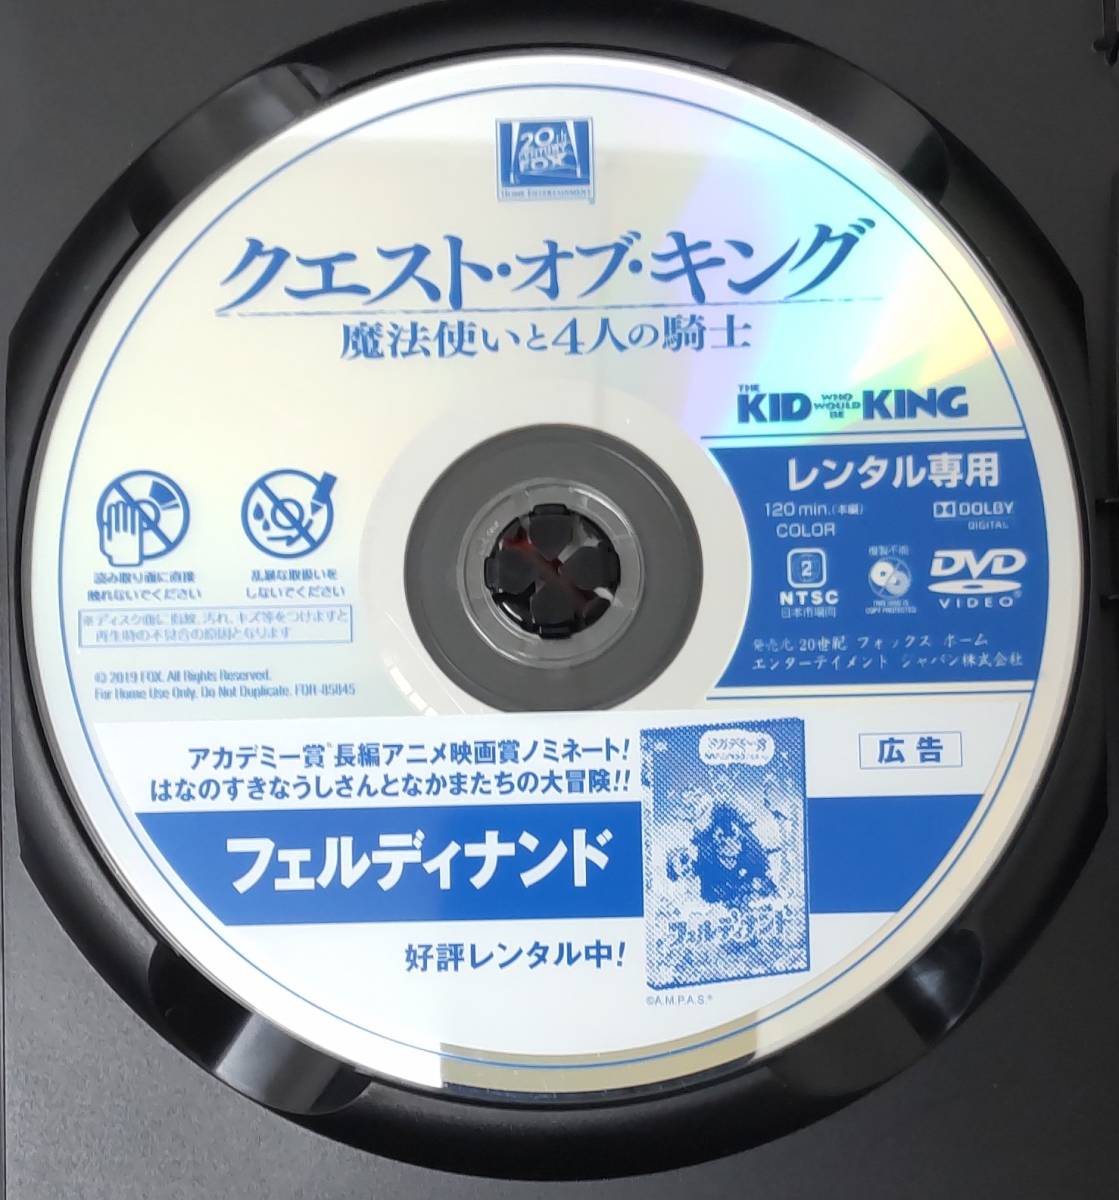 i2-2-1 Quest *ob* King ( Western films )FXBR-85845 rental up used DVD